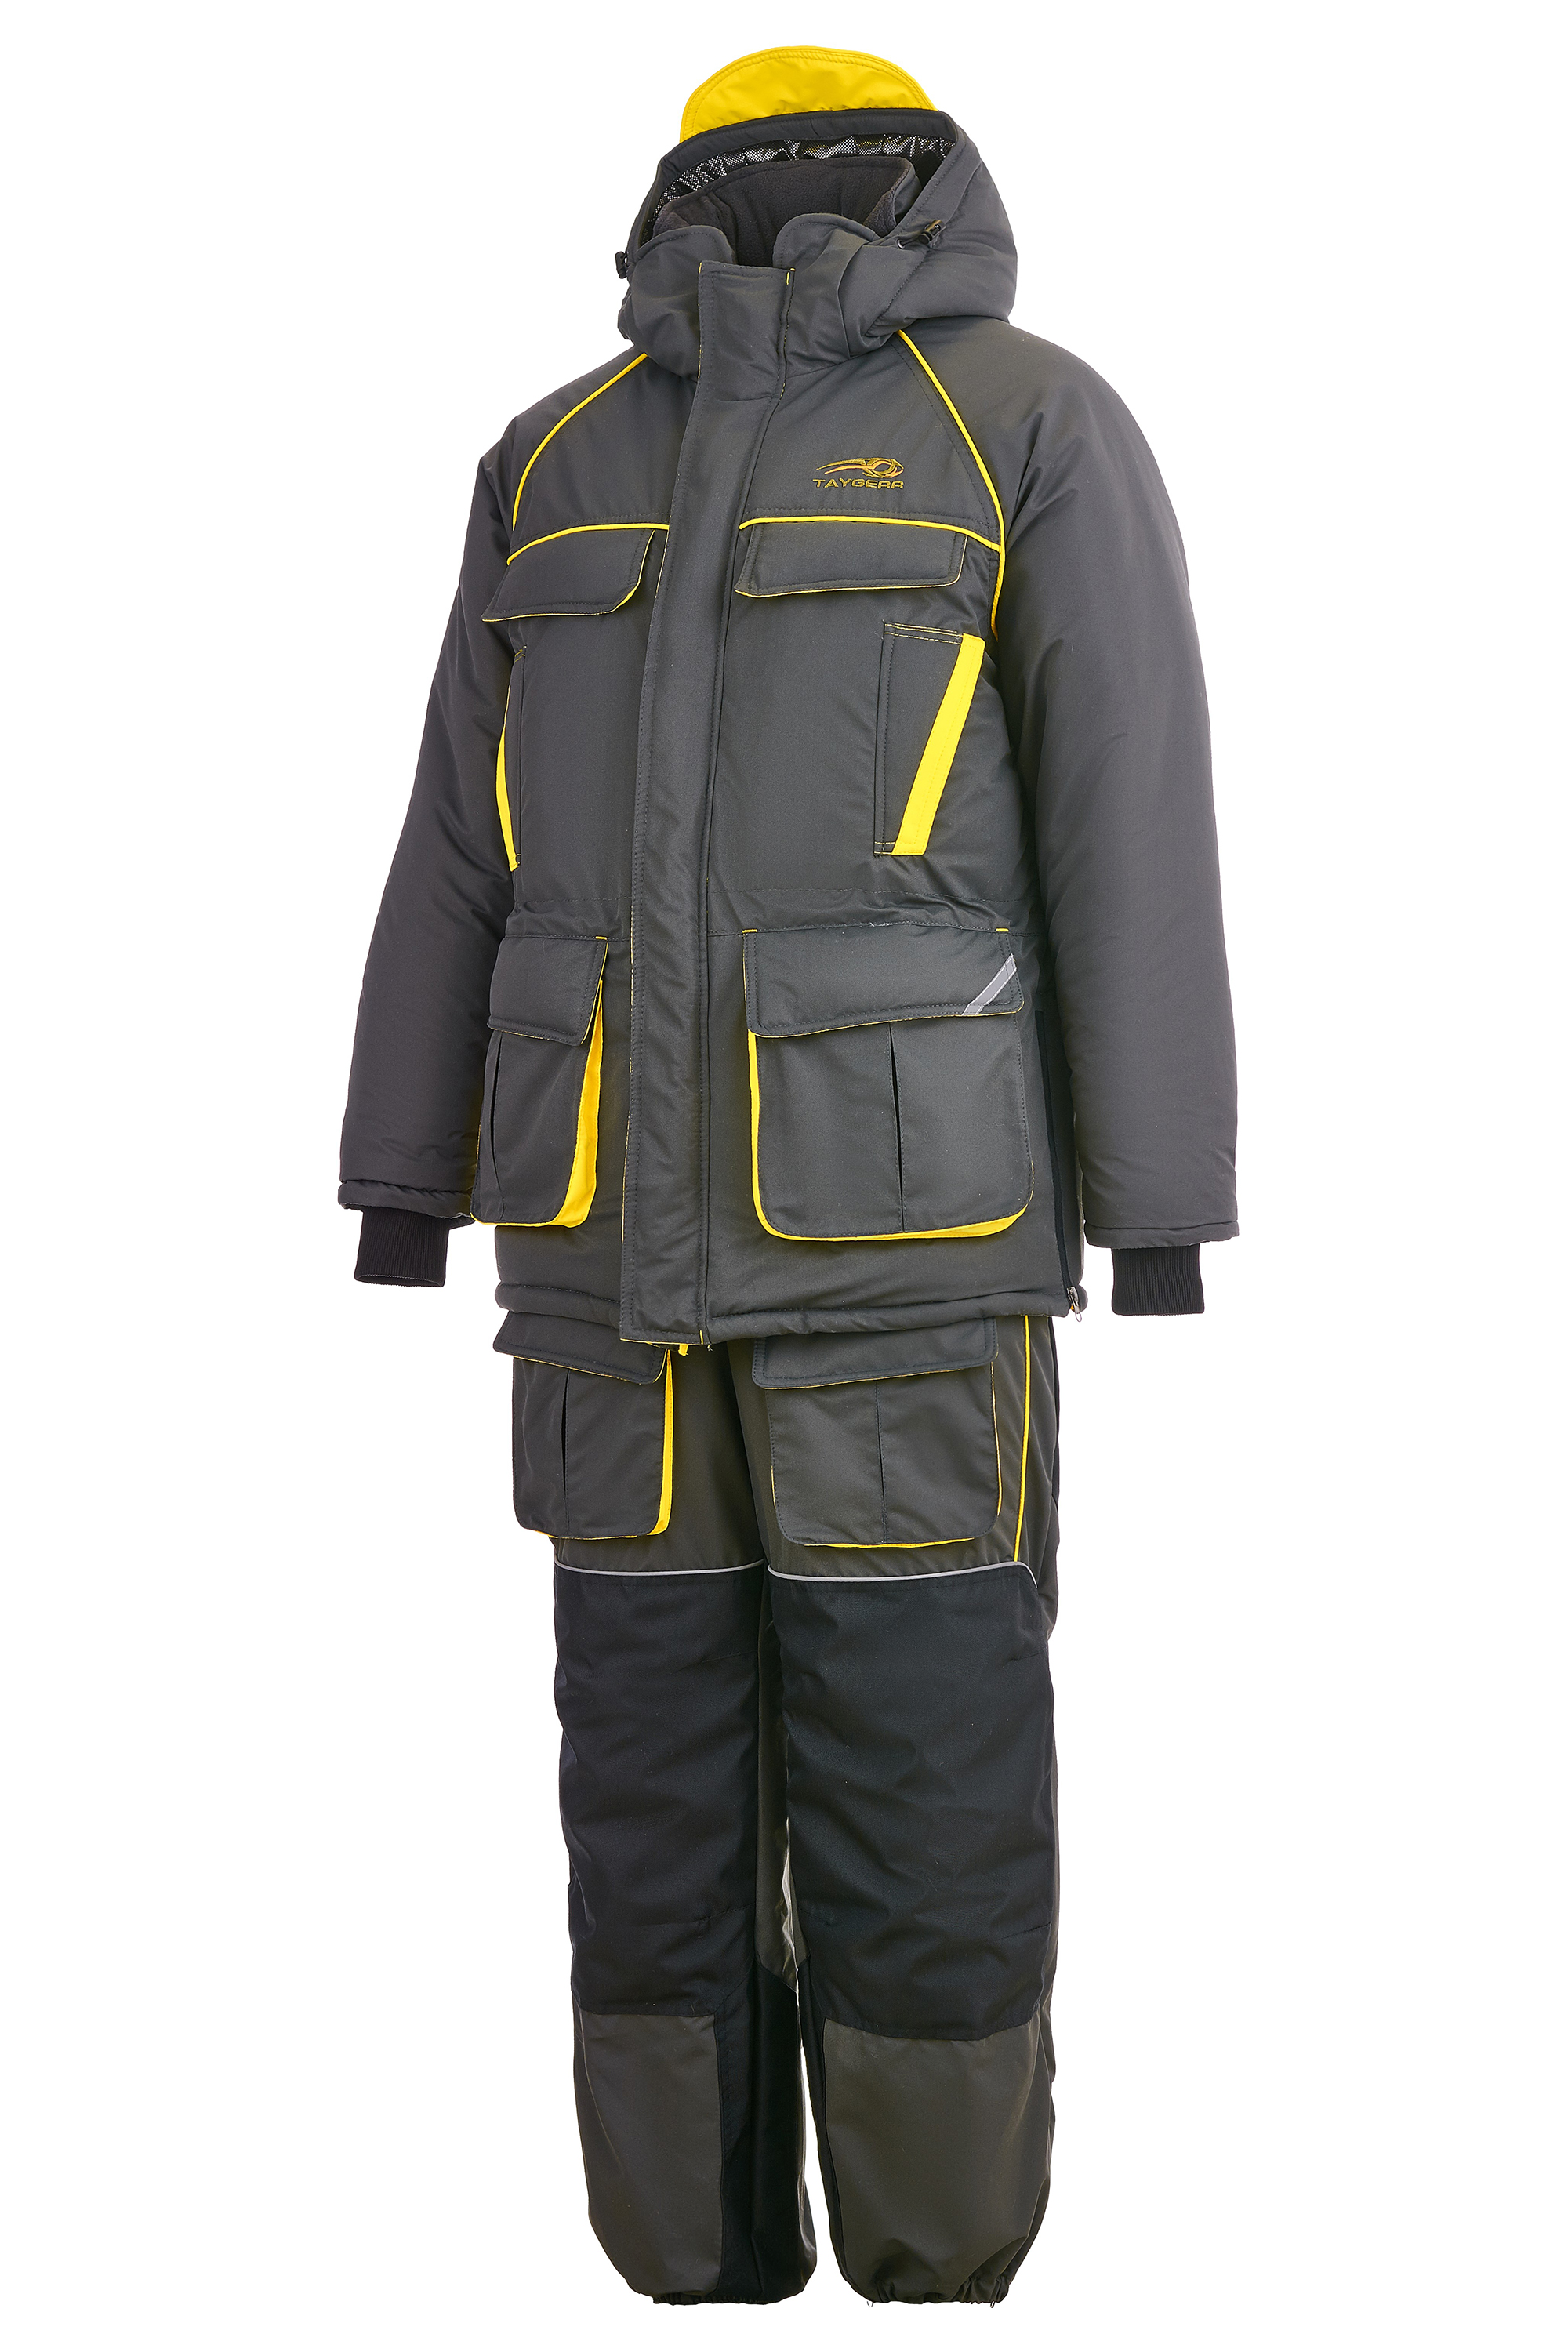 Костюм для зимней рыбалки цена. Костюм TAYGERR Камчатка. Зимний костюм TAYGERR Камчатка New. Зимний костюм TAYGERR Камчатка -45 для рыбалки. Зимний рыболовный костюм Тайгер.